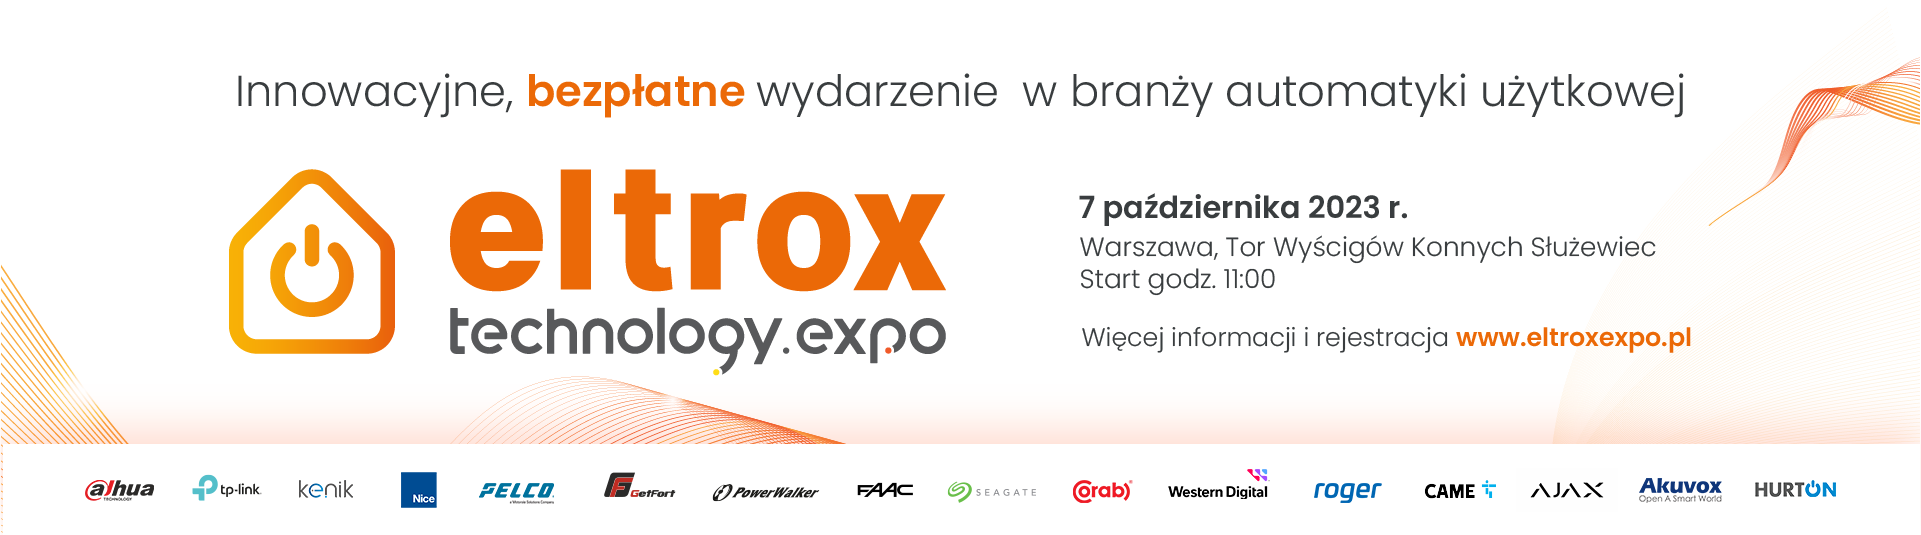 Eltrox Technology.EXPO